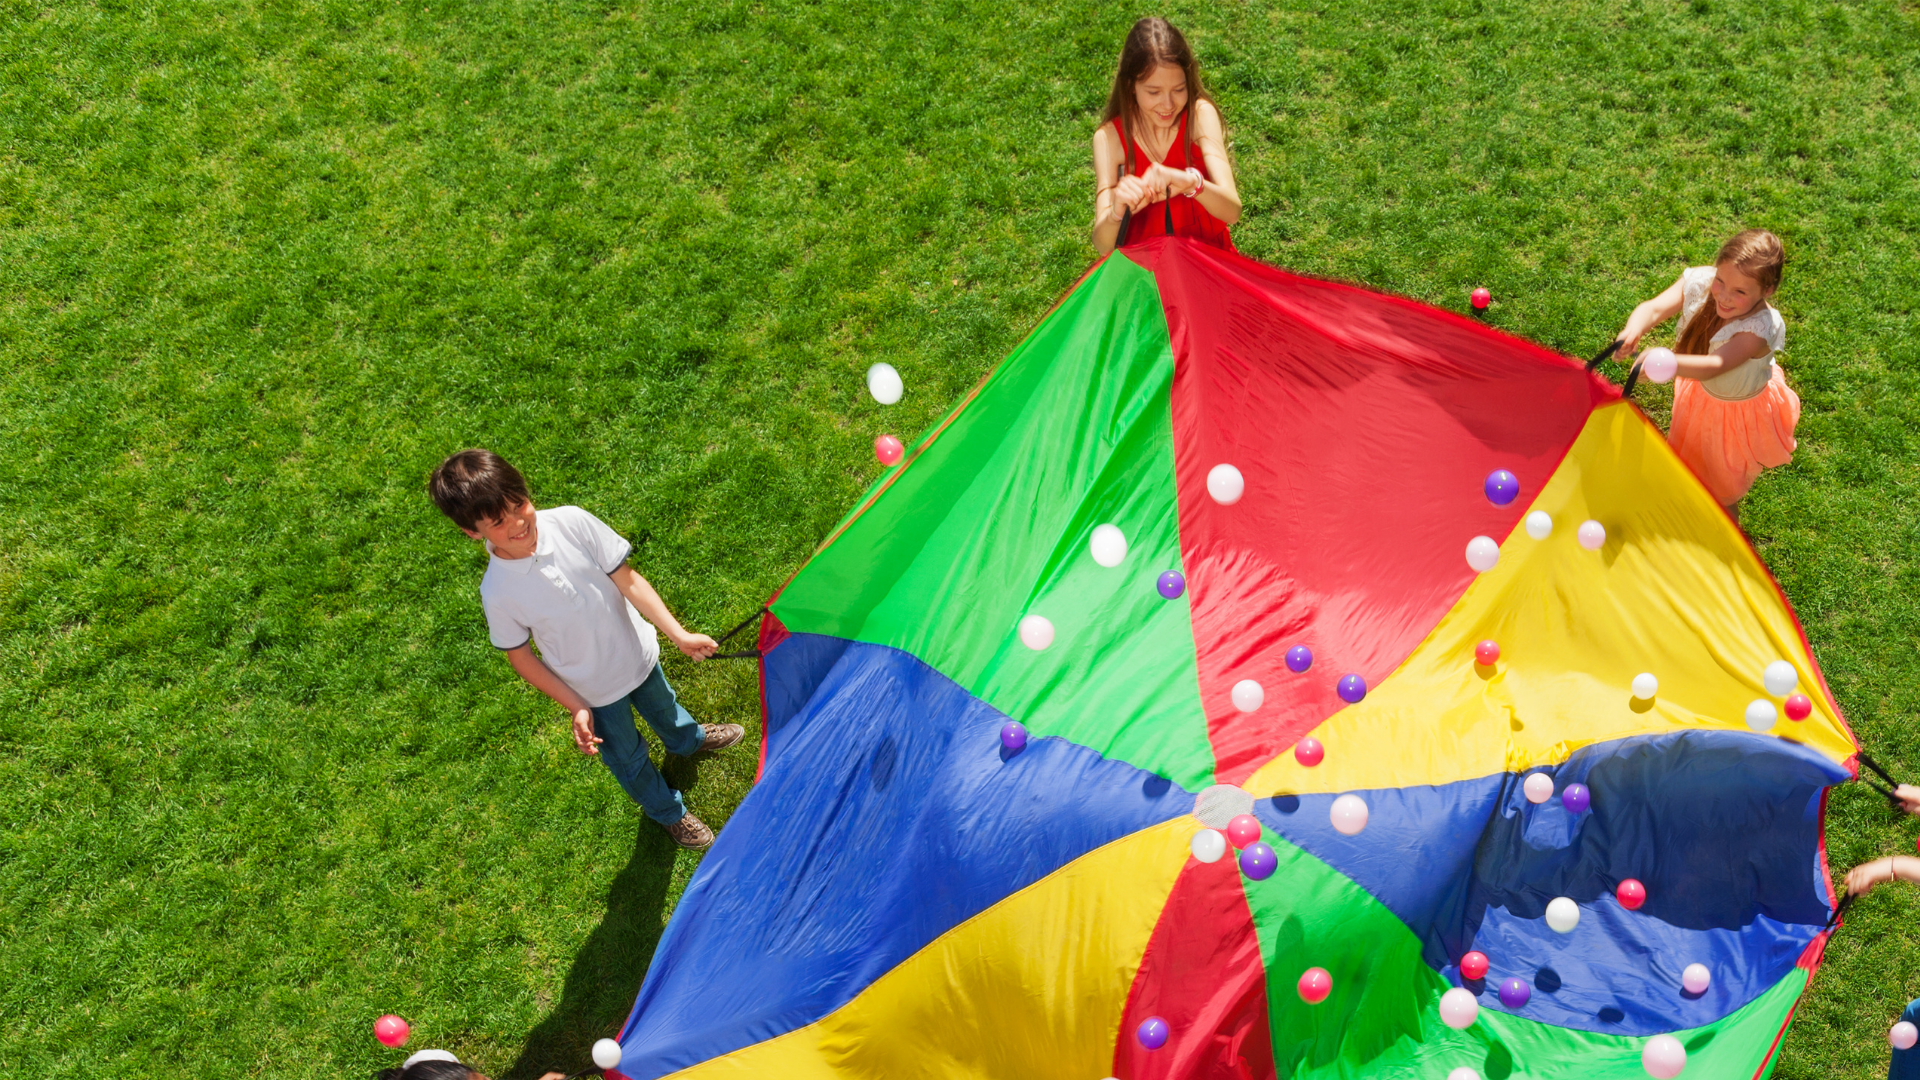 Kids around a colorful parachute